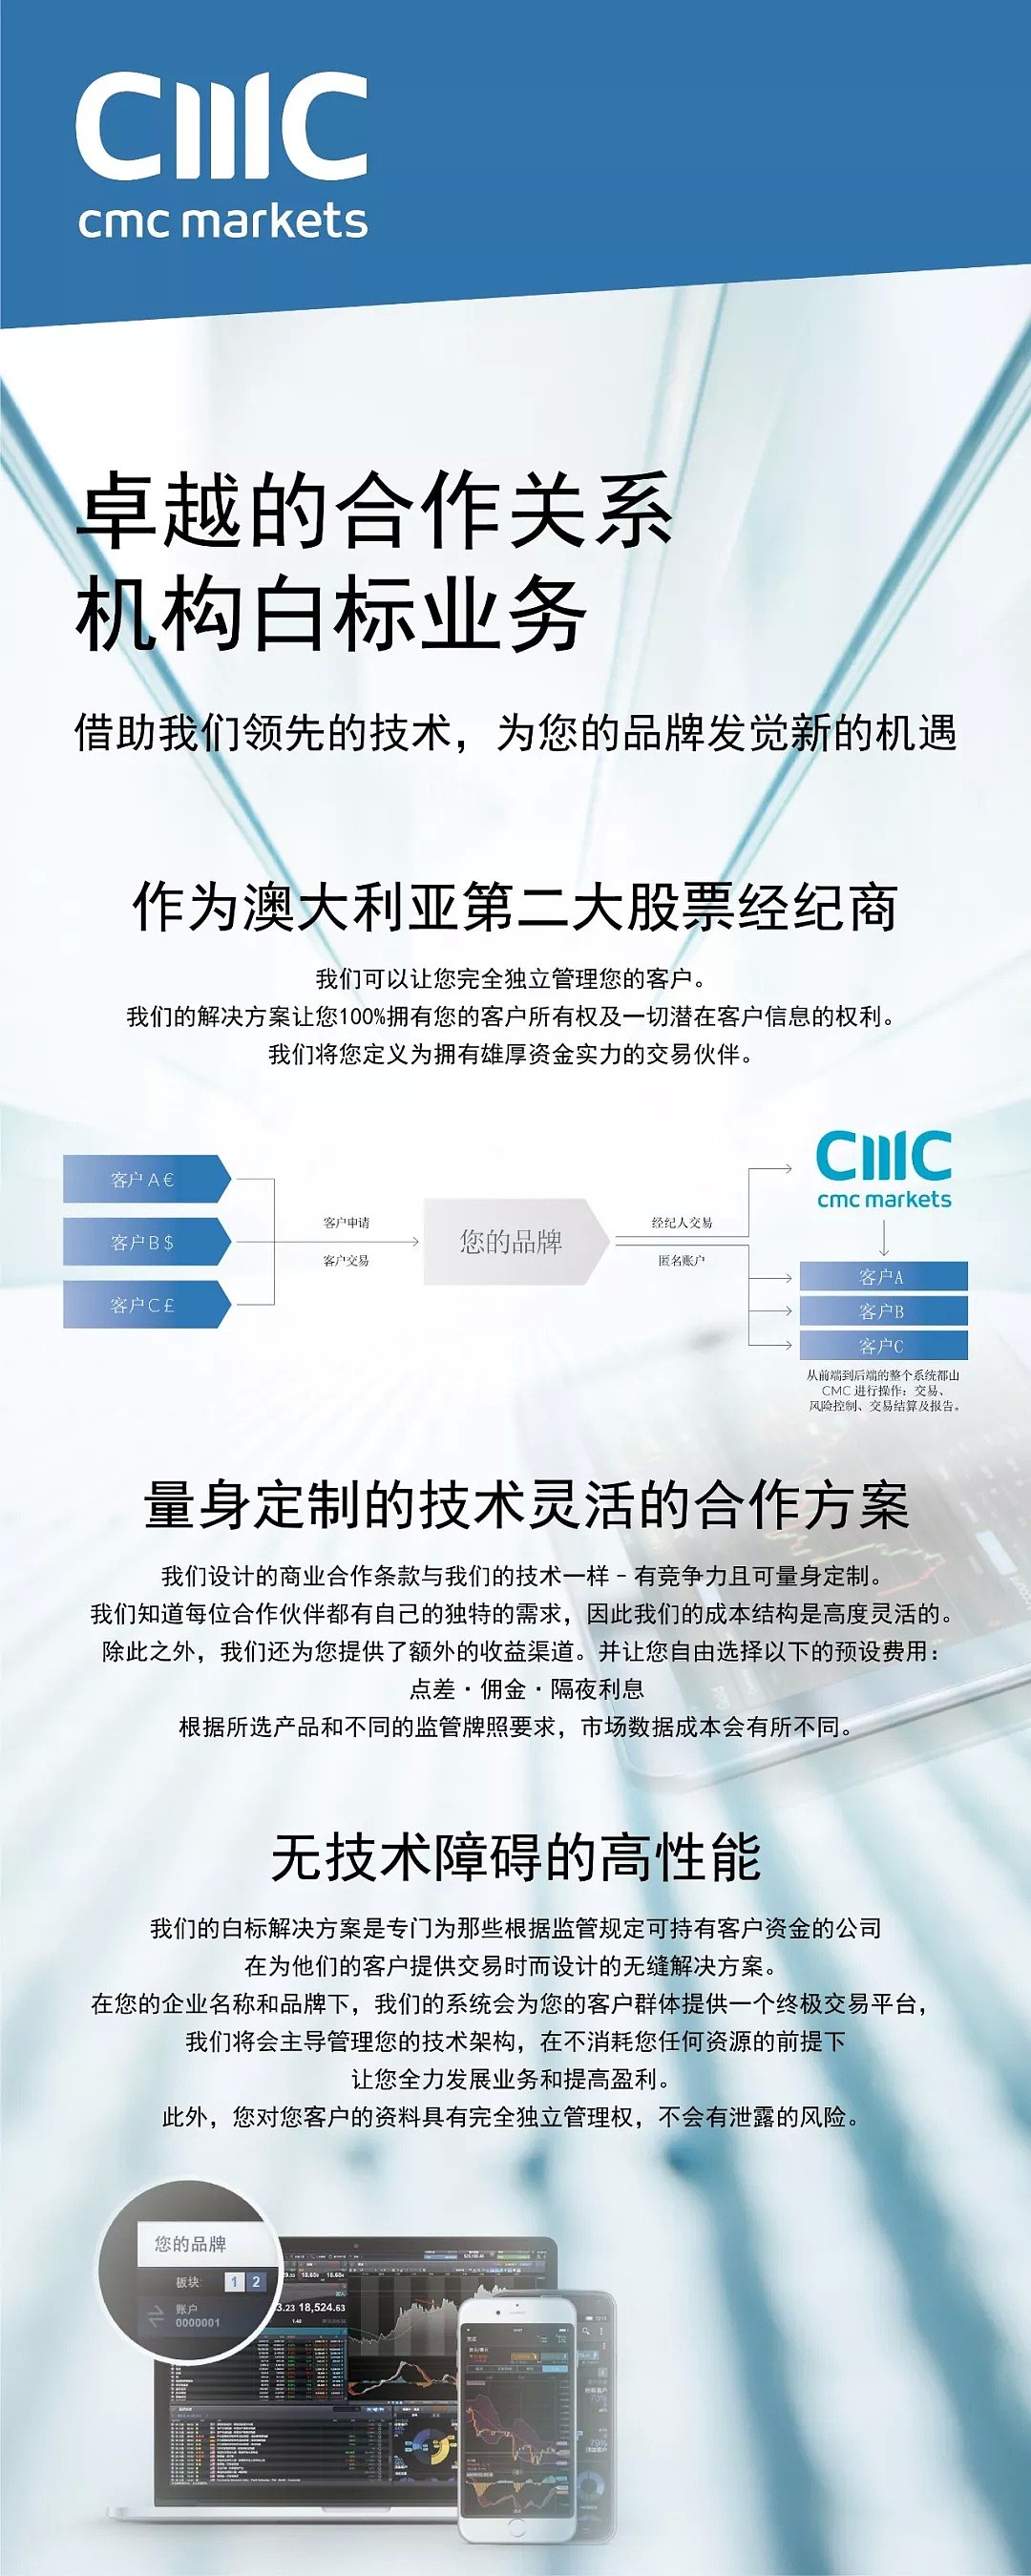 CMC Markets即将亮相2019香港亚洲金融博览会 - 2